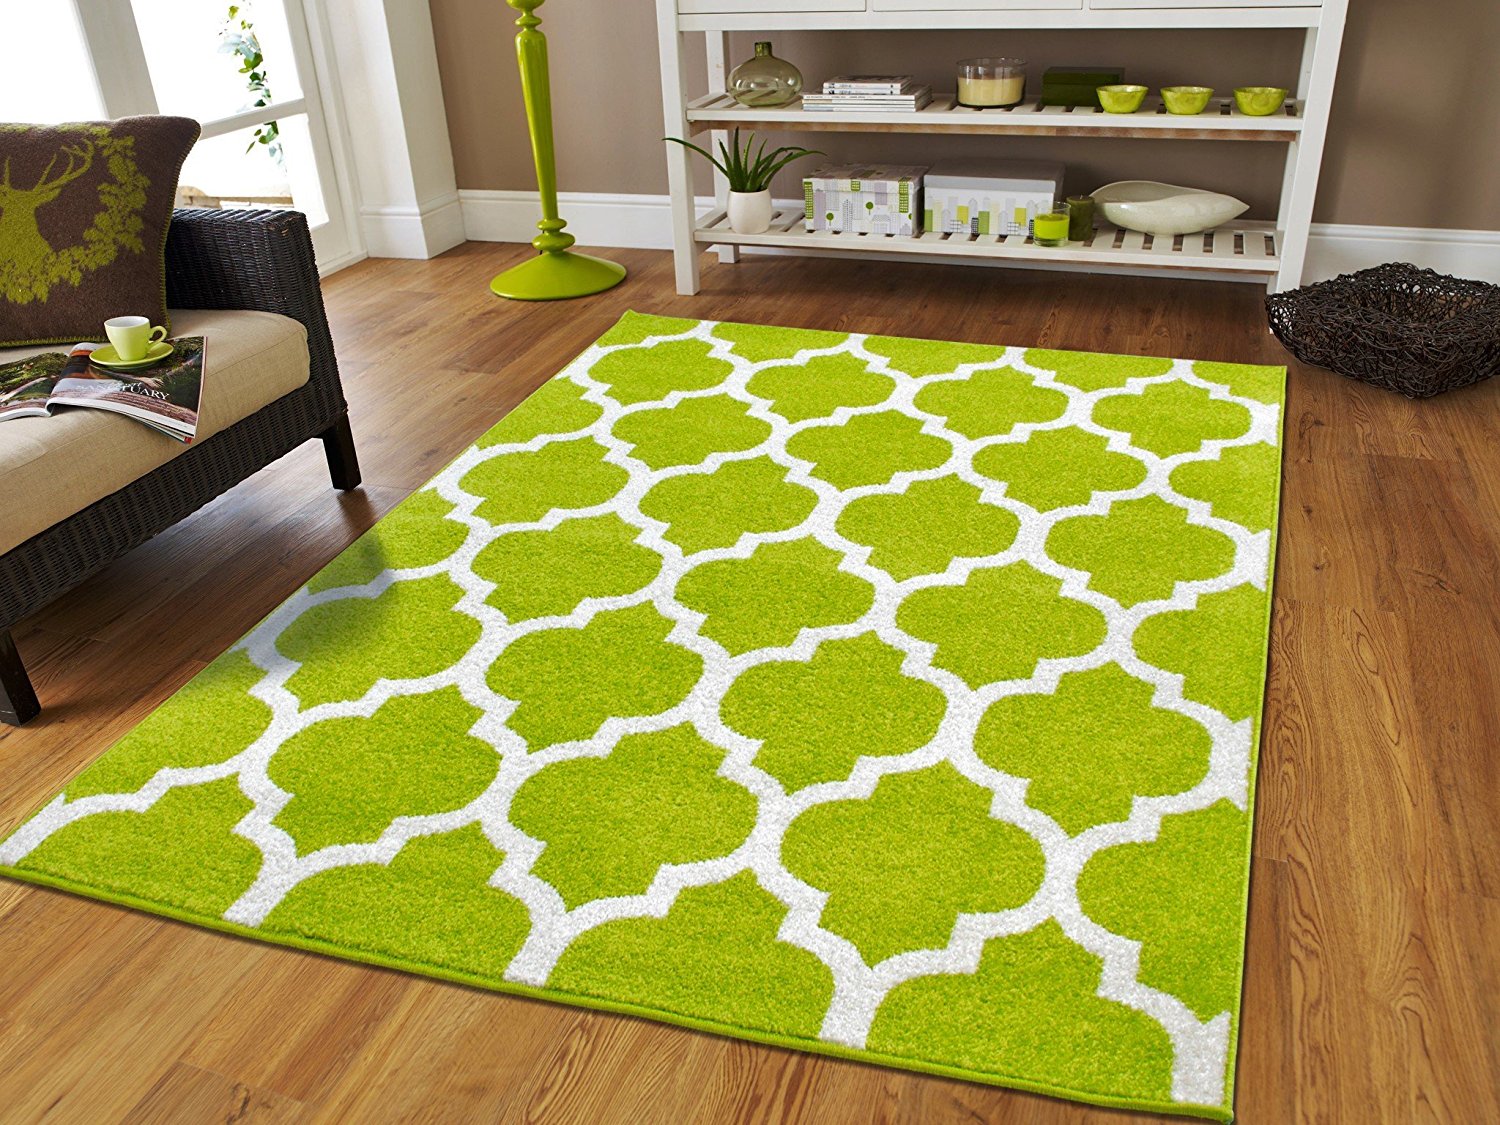 luxury morrocan trellis green rugs 8x10 area rugs under $100 bedroom rugs UGEMEZD